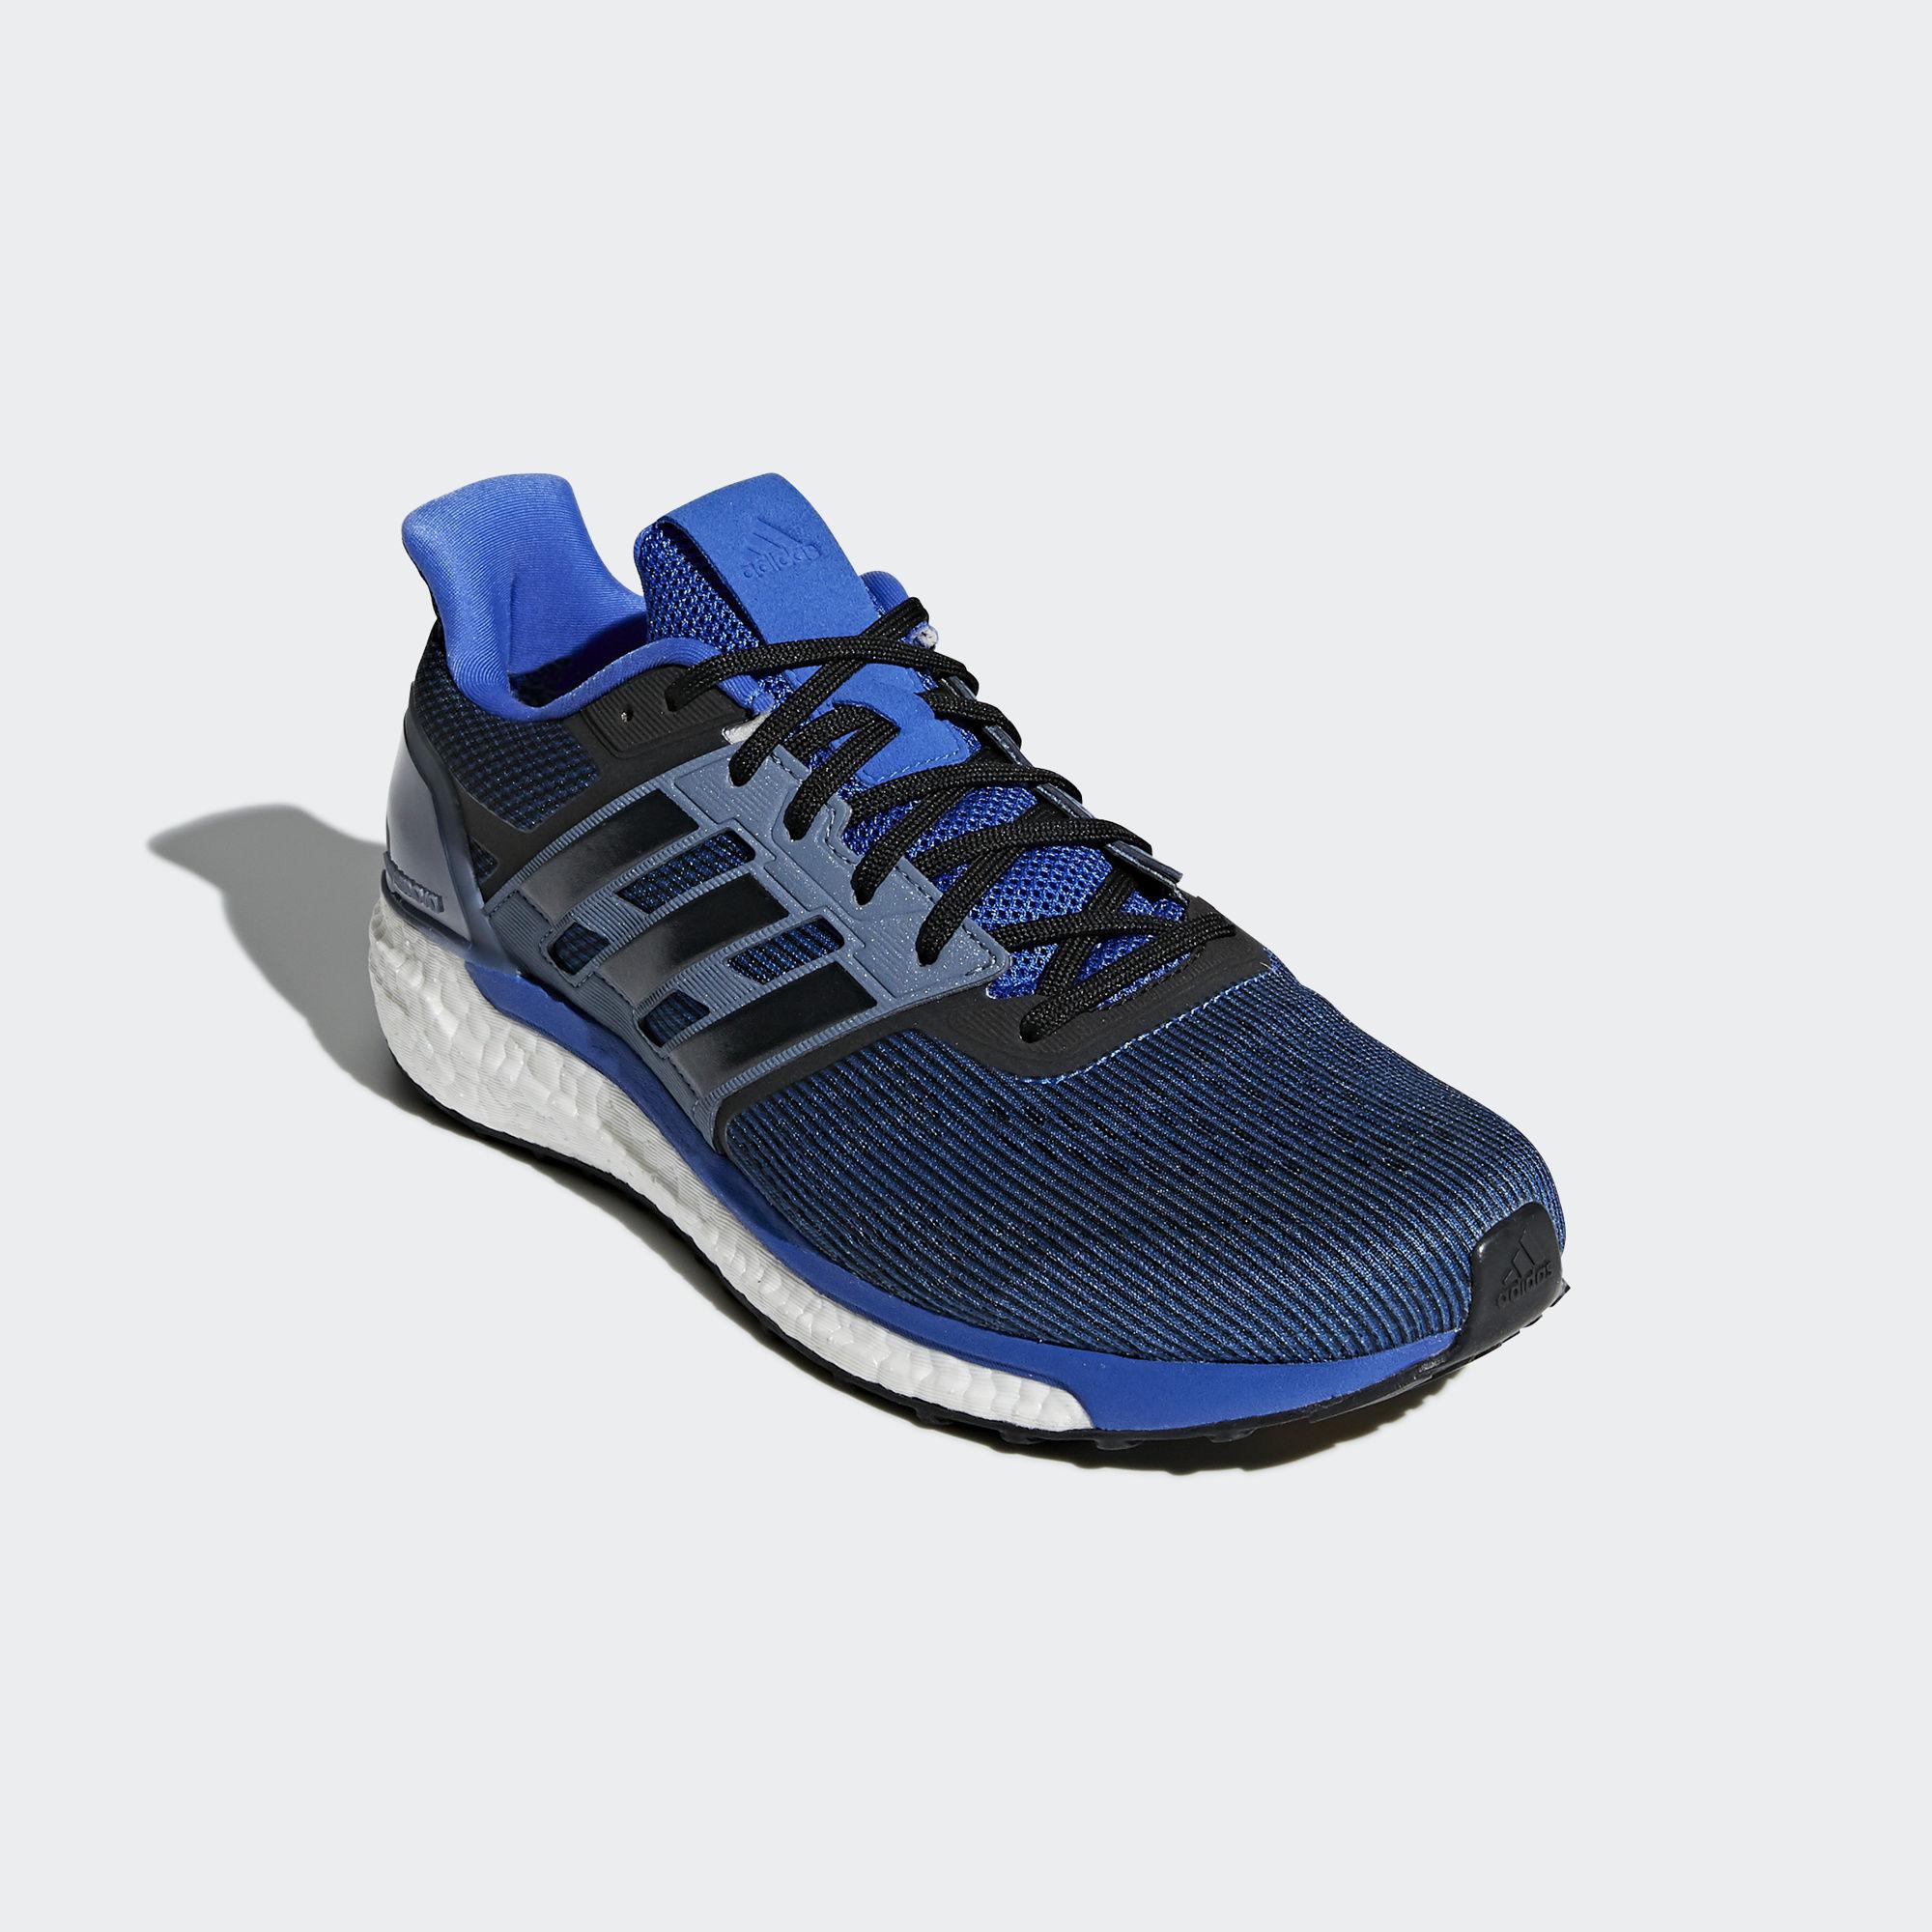 Adidas Mens Supernova Running Shoes Blue/Core Black/Raw